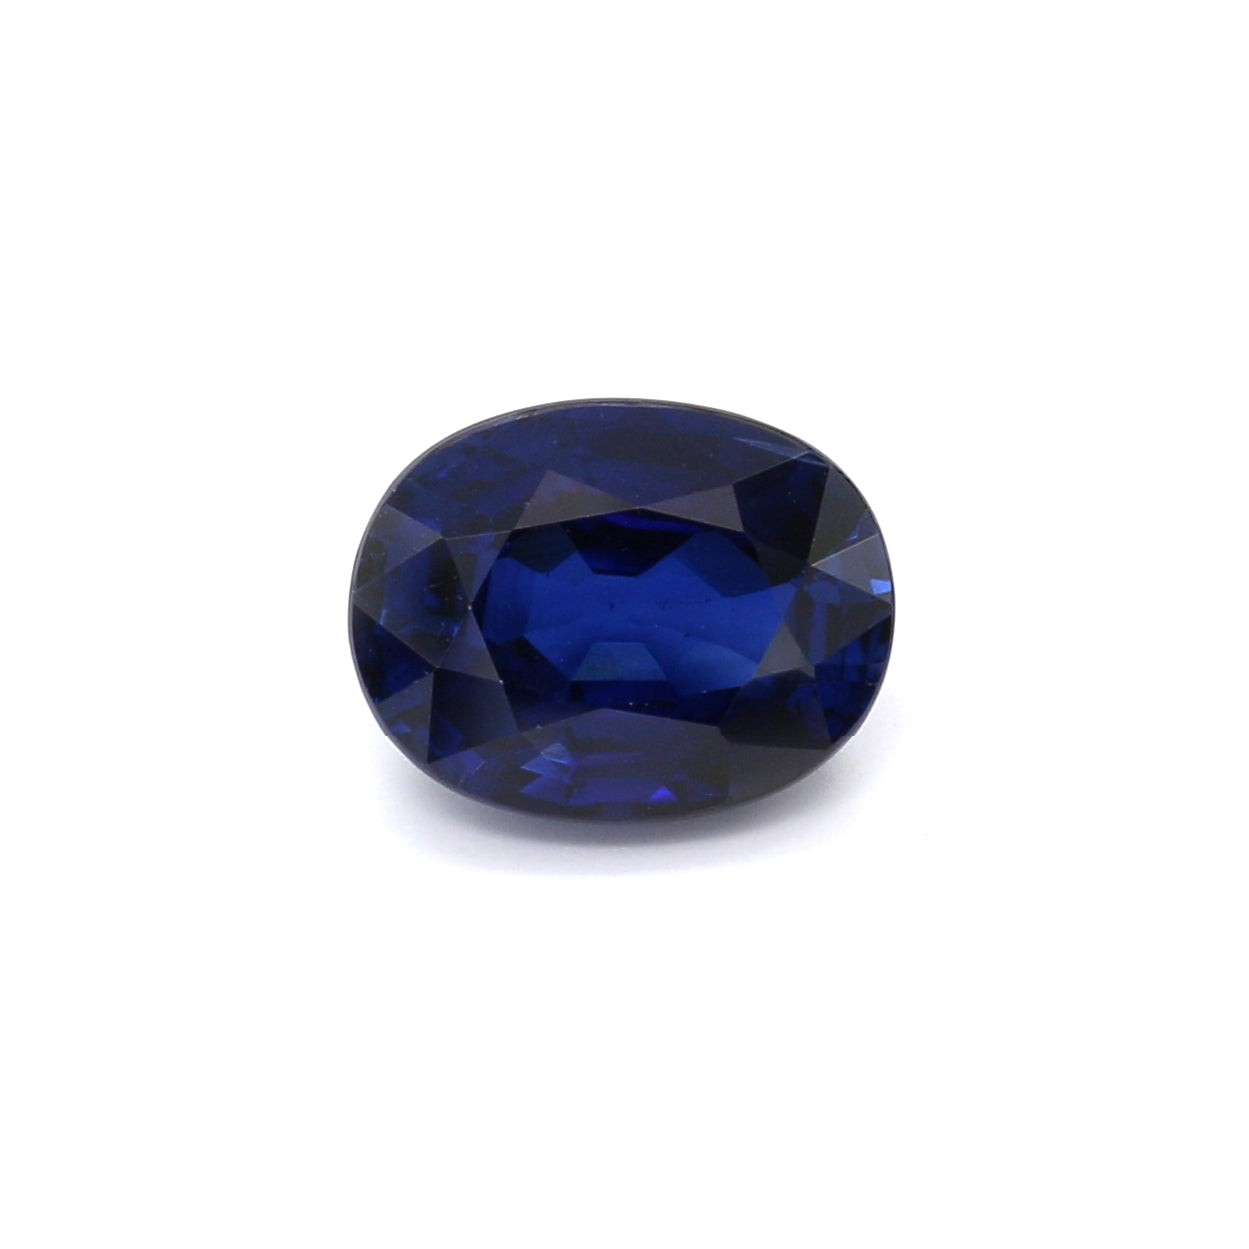 2.88ct Vivid, Royal Blue, Oval Sapphire, Heated, Madagascar - 9.51 x 7.45 x 4.70mm